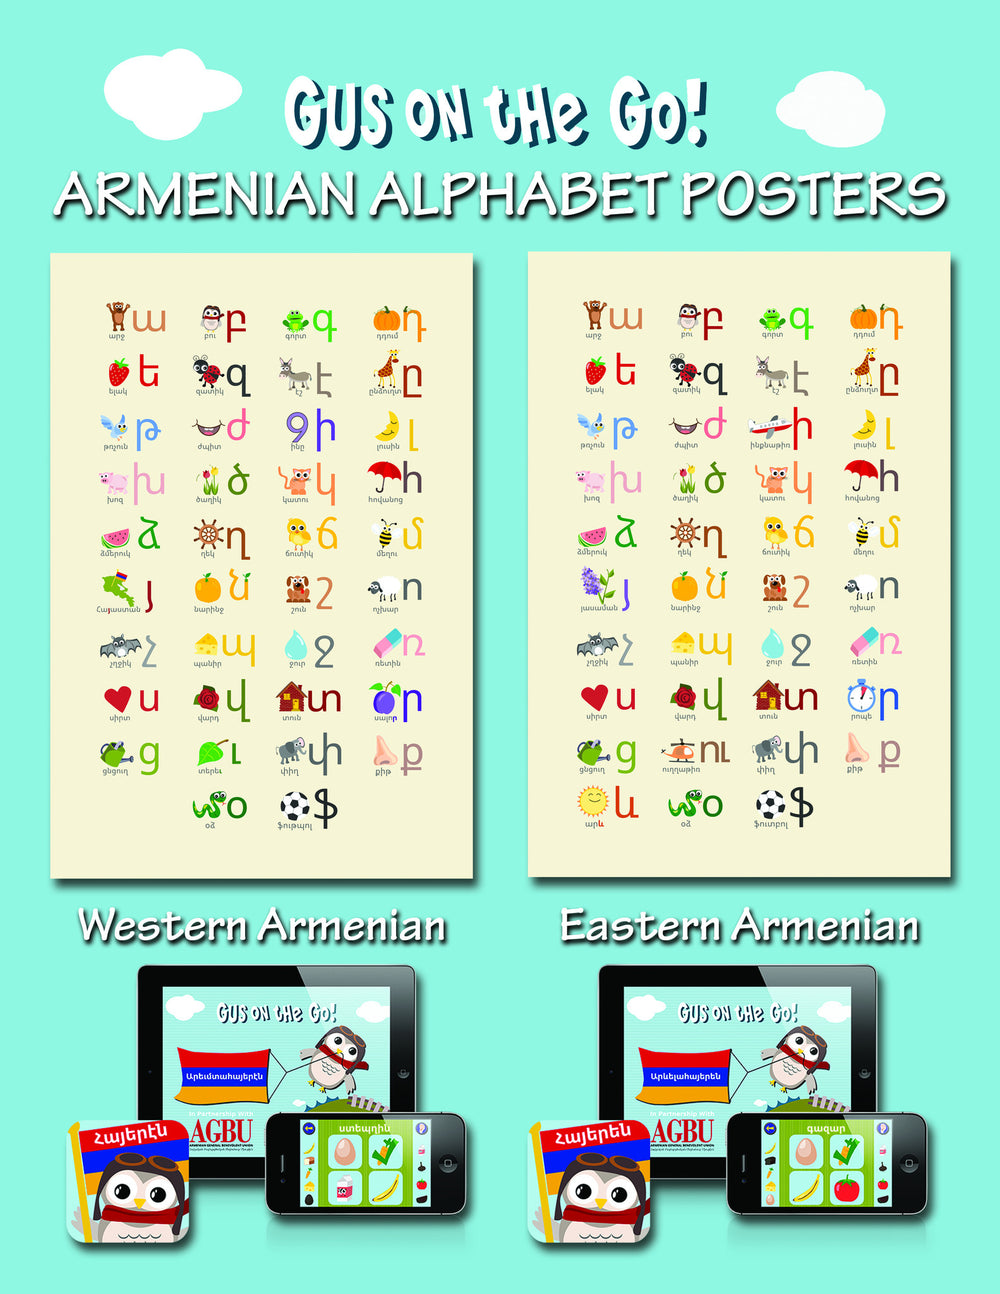  Armenian Alphabet Kids Educational Poster - 2pack set  (Pictorial Poster & Manuscript Writing Poster) 18x24